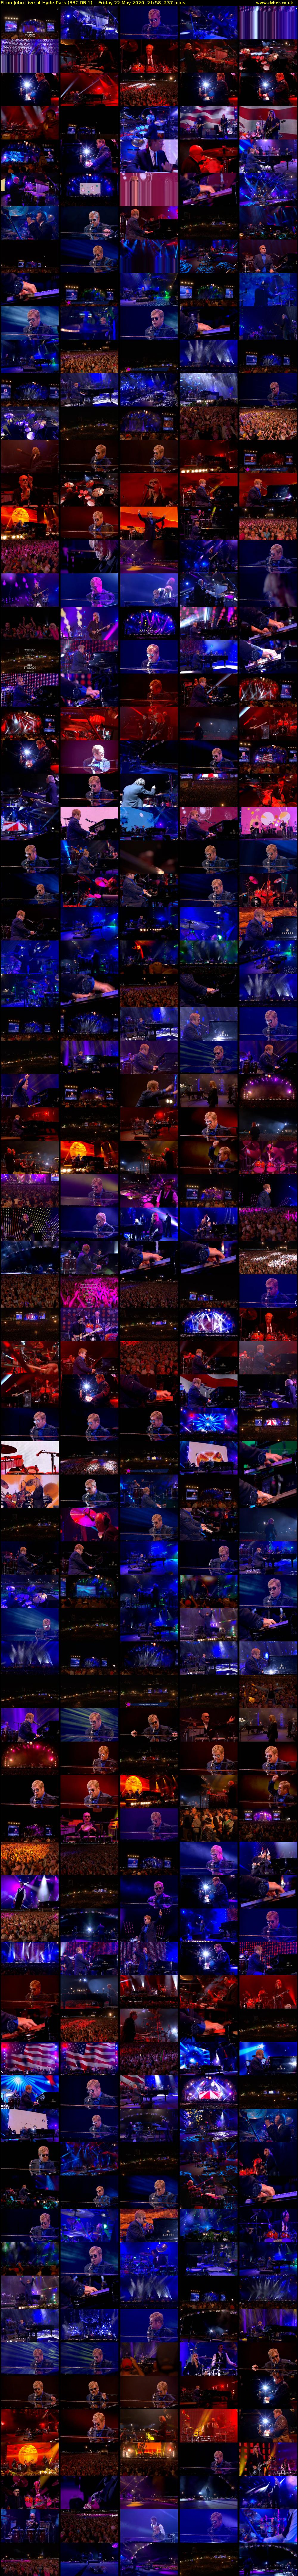 Elton John Live at Hyde Park (BBC RB 1) Friday 22 May 2020 21:58 - 01:55